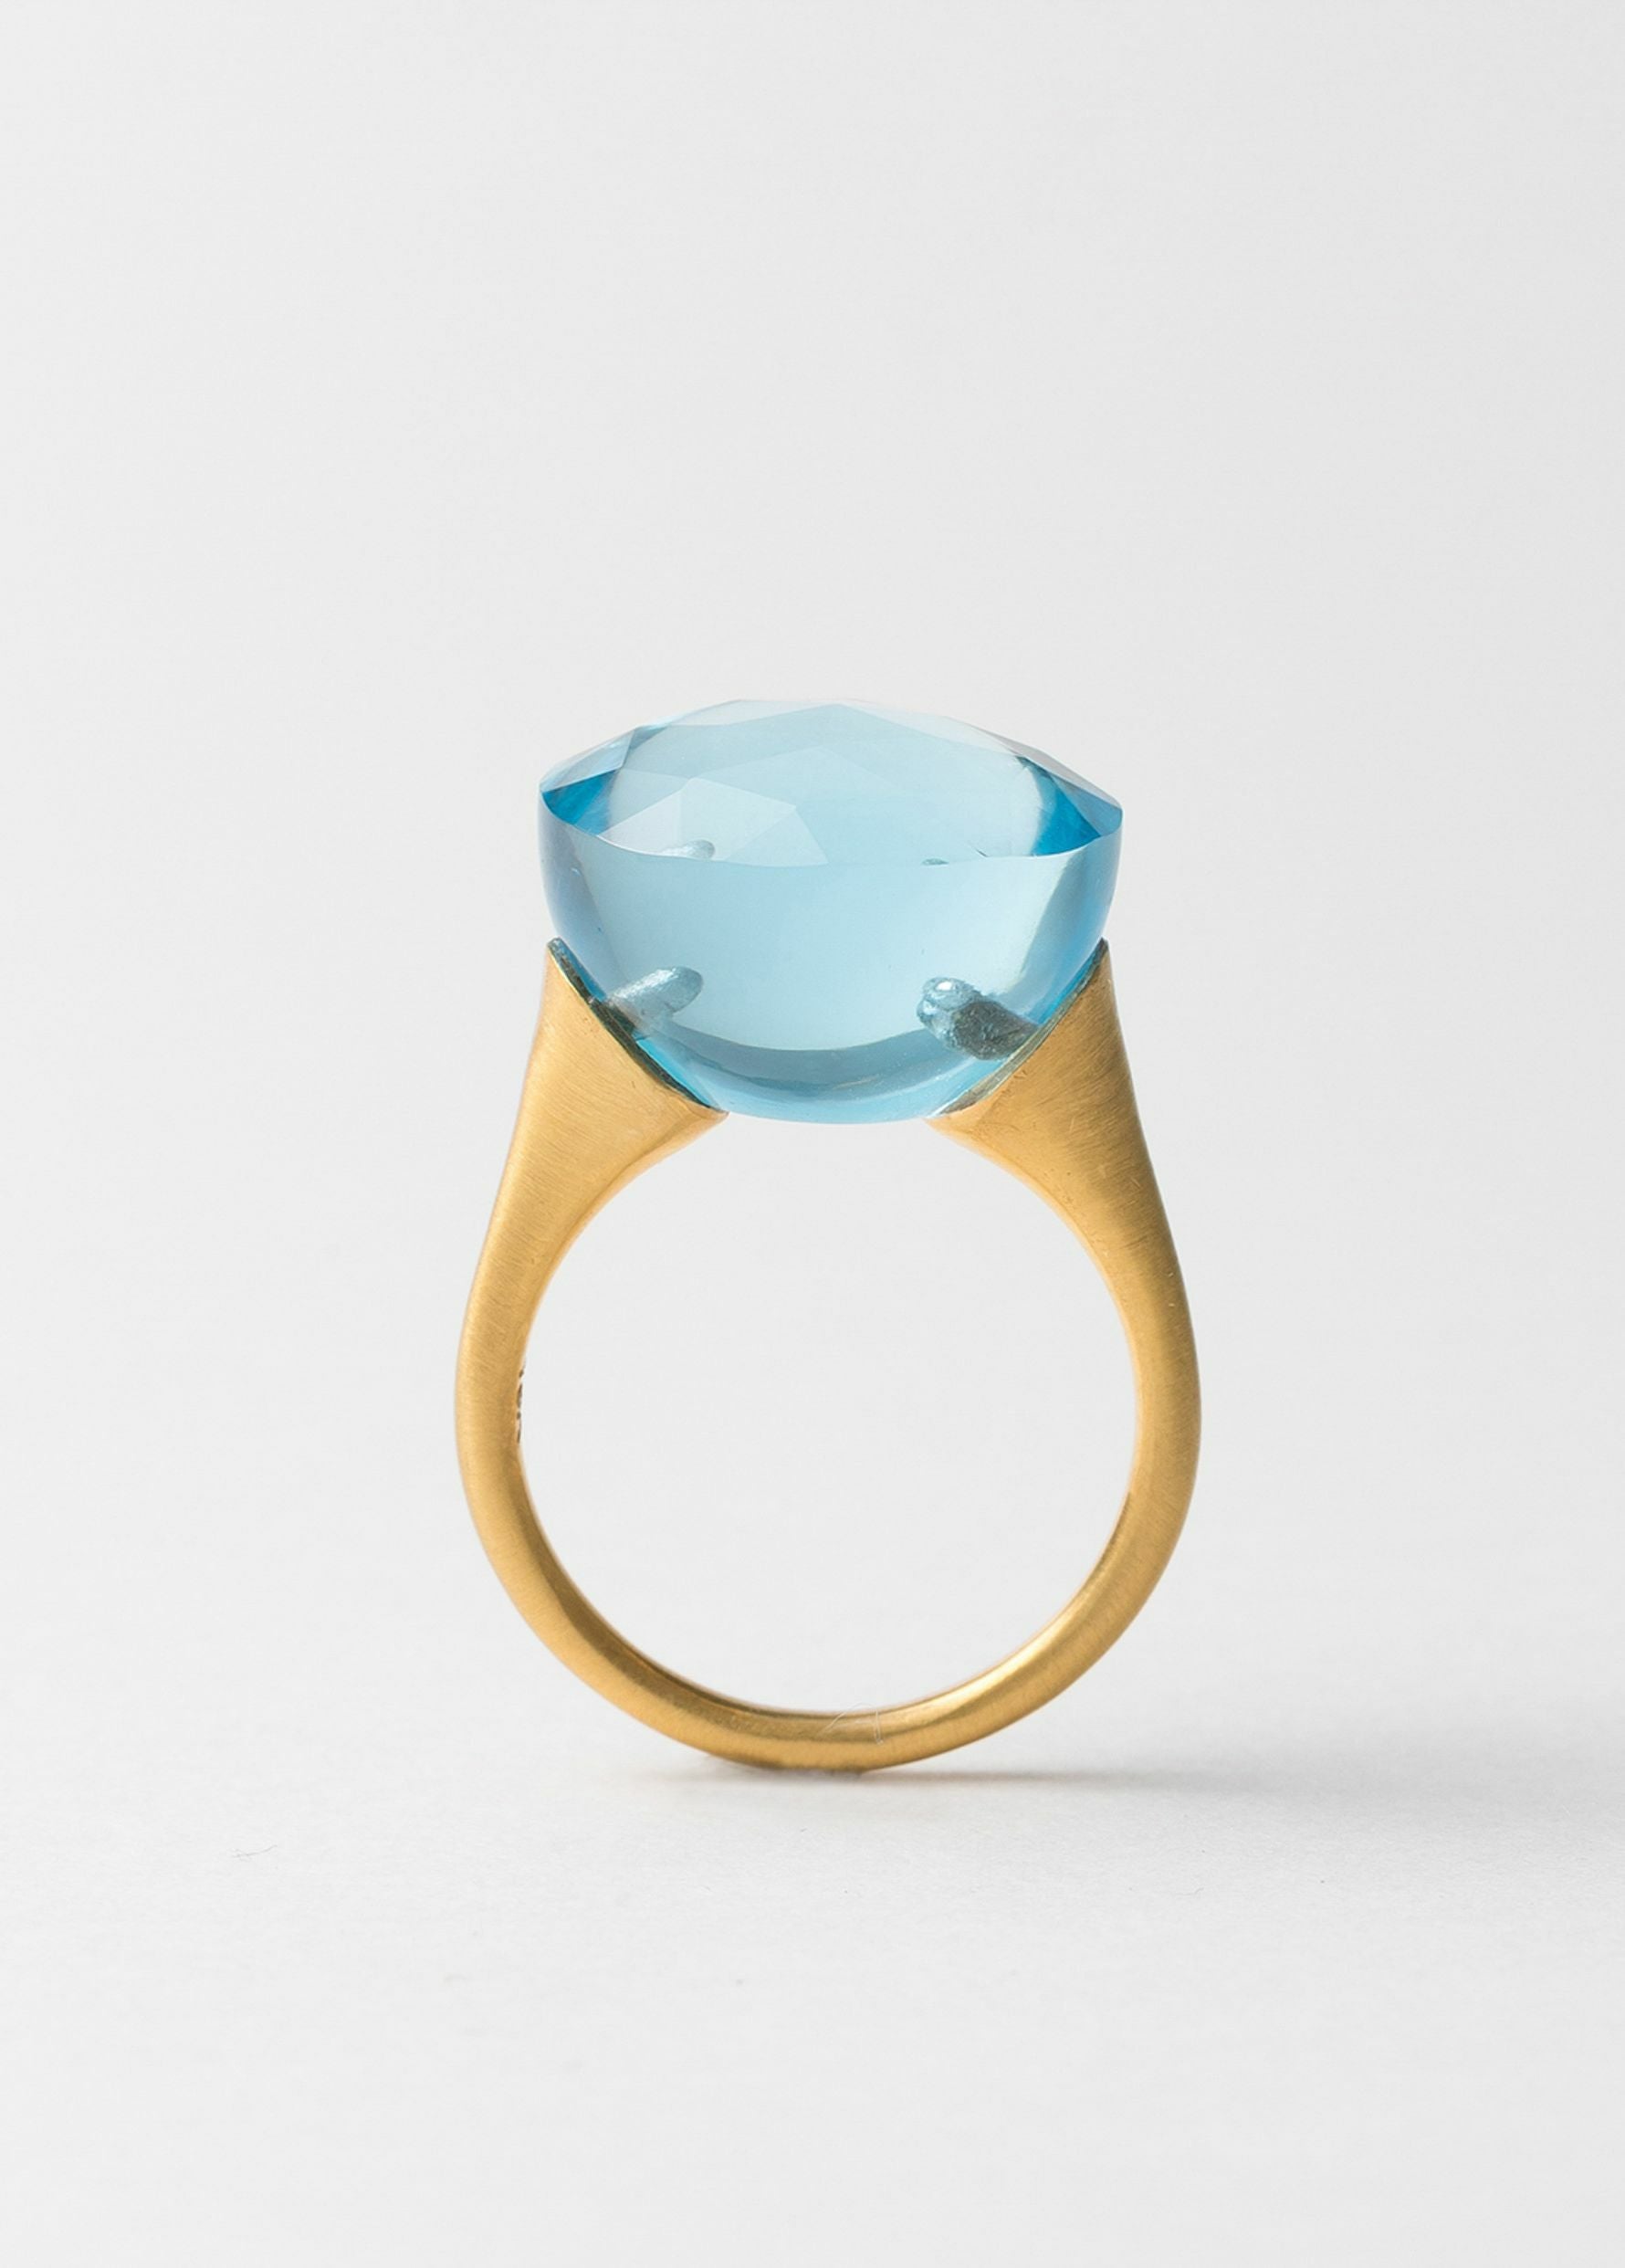 Nailed Blue Topaz Ring